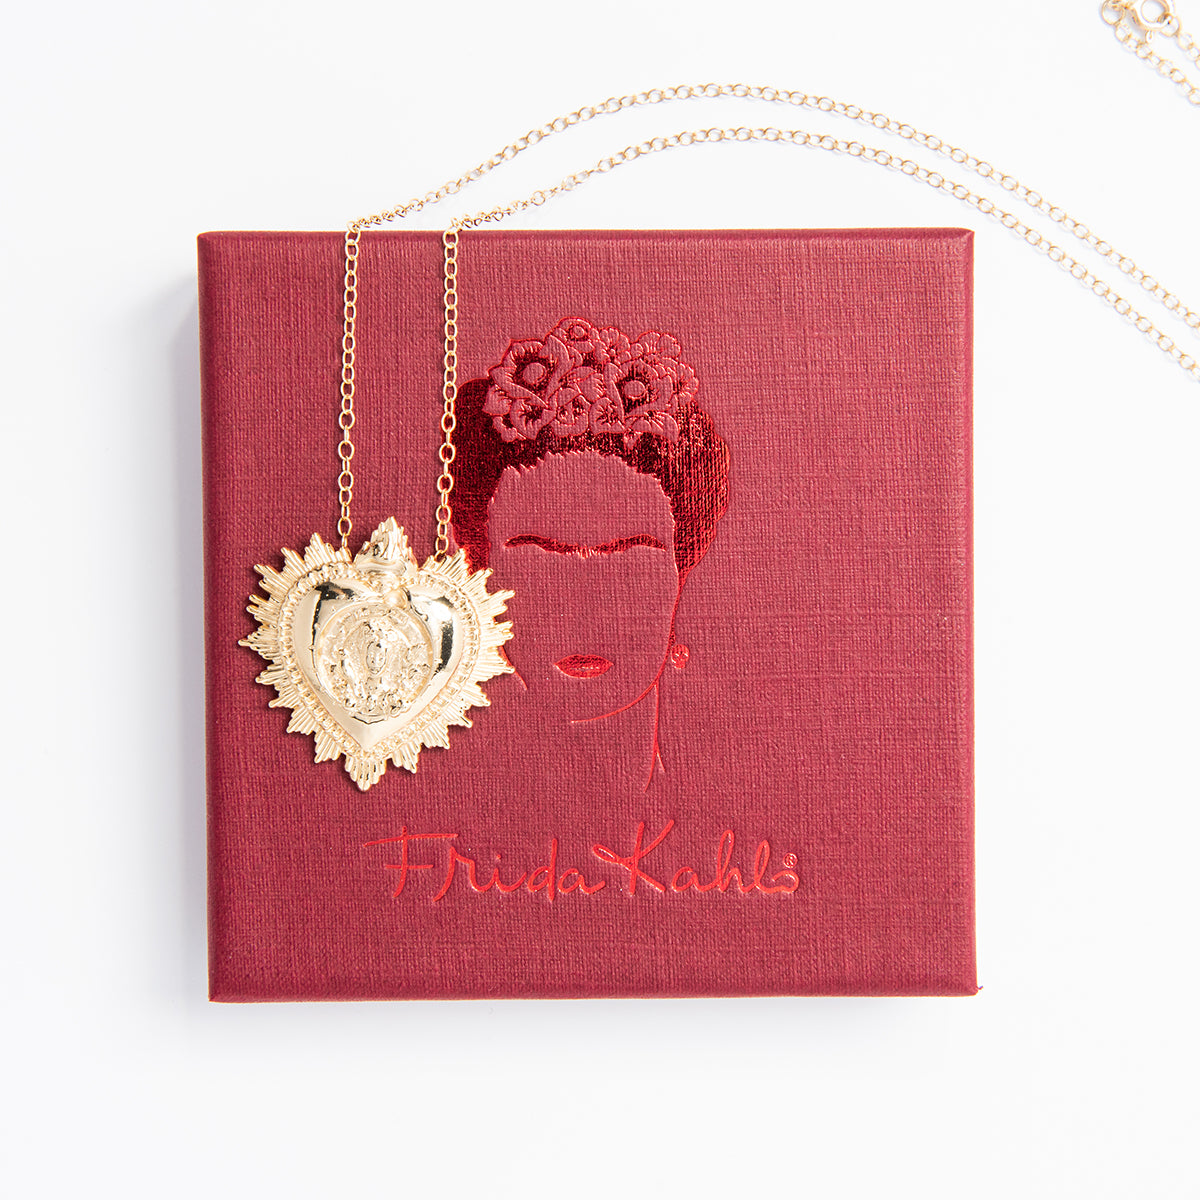 Frida Kahlo Viva La Vida Heart Necklace 18ct Gold Vermeil 